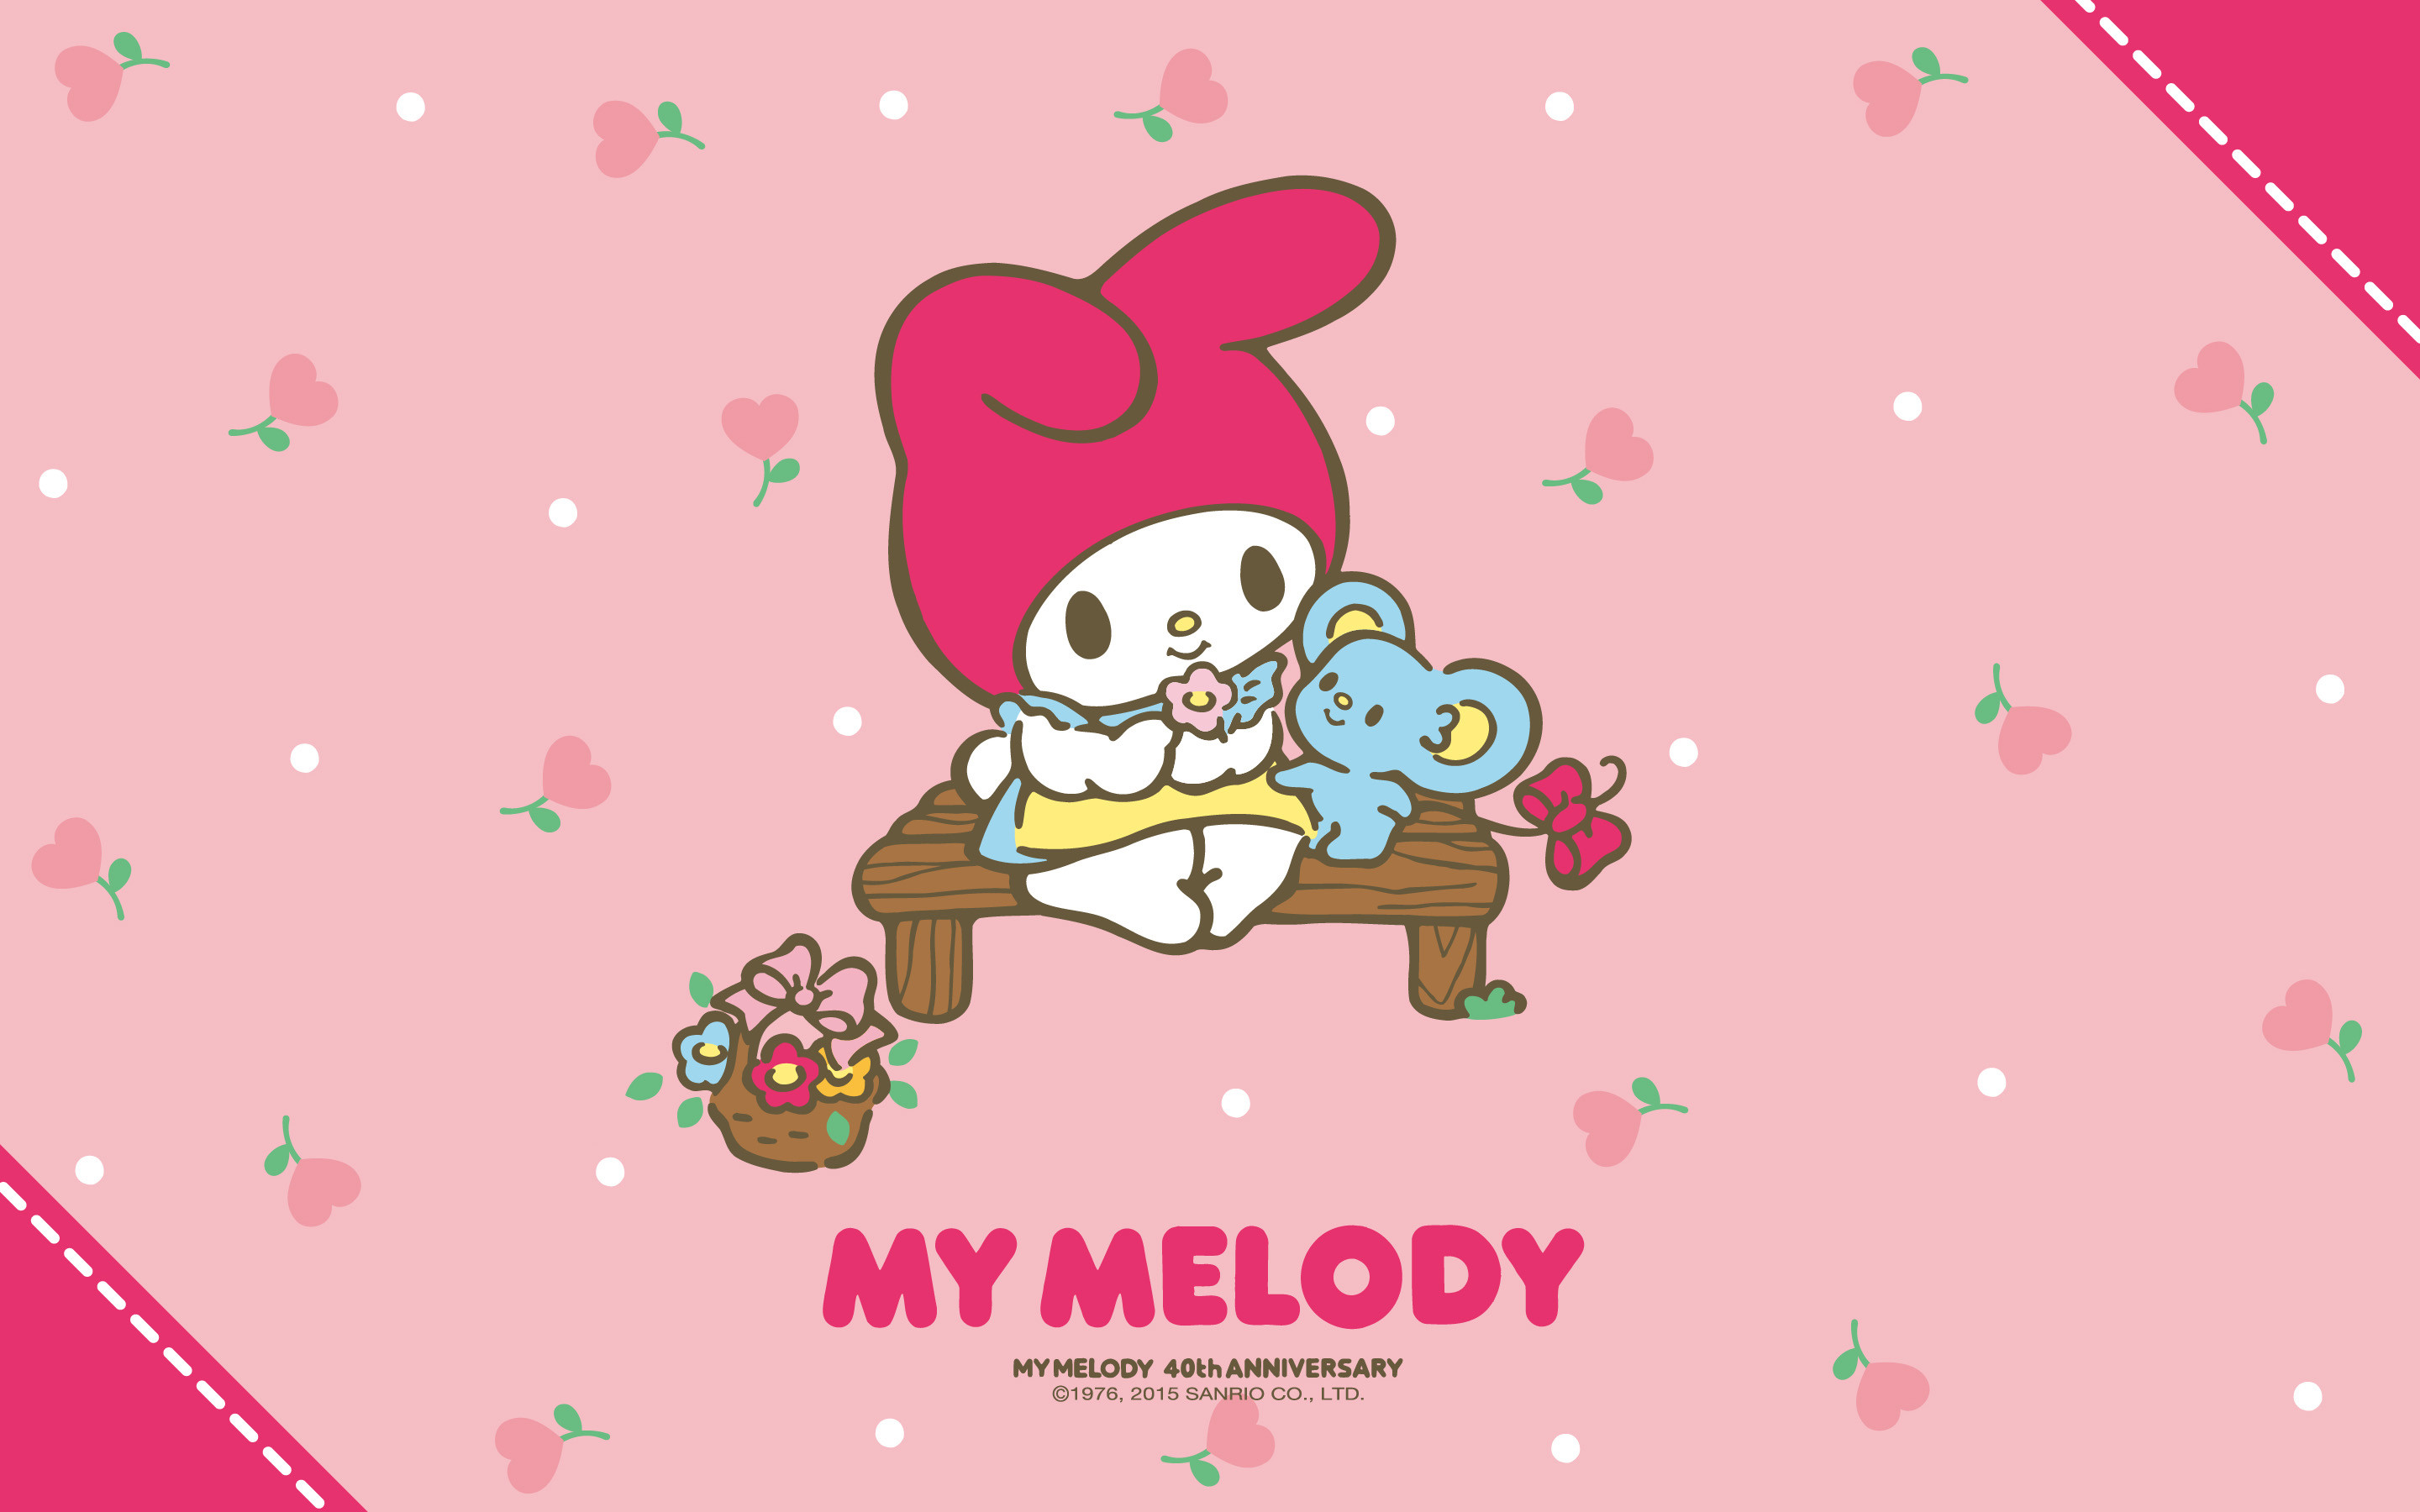 2880x1800 My Melody & Koala Pink Wallpaper - My Melody is sitting with a cute little  koala